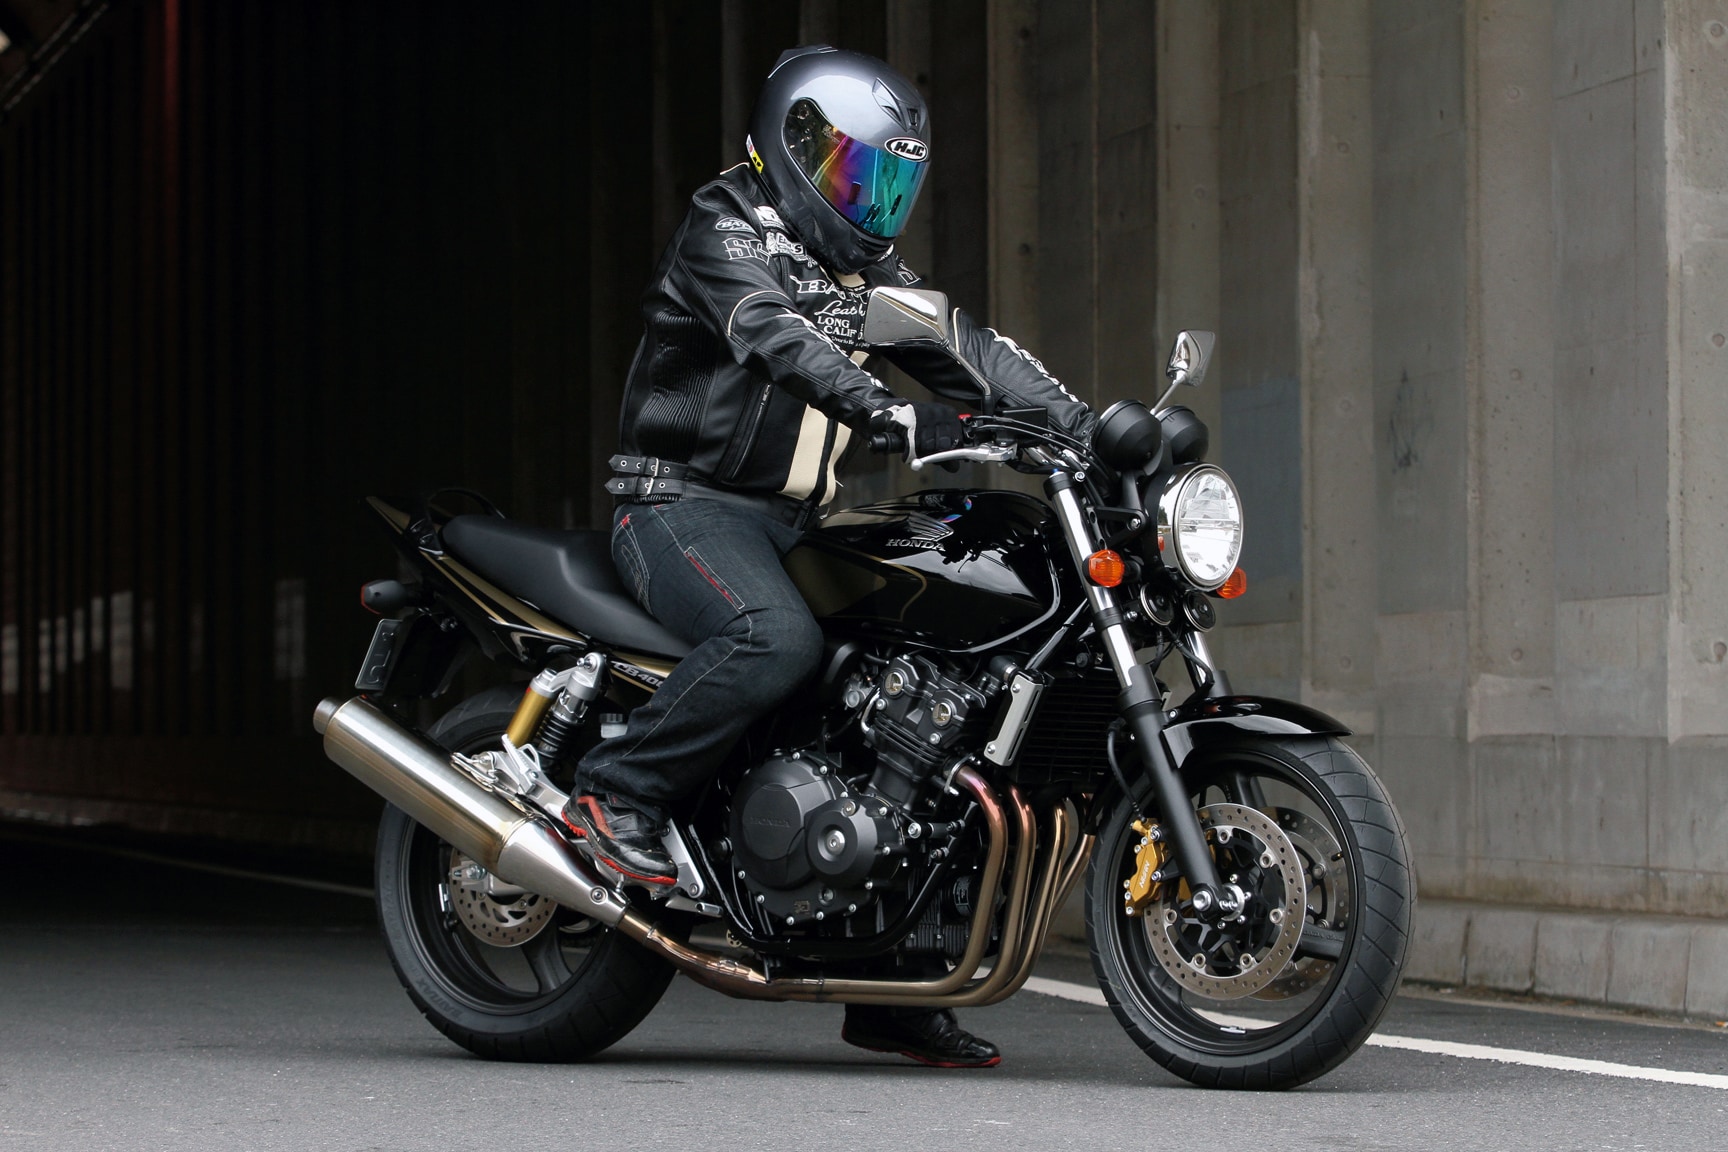 Honda Cb400sf バイク足つき アーカイブ タンデムスタイル